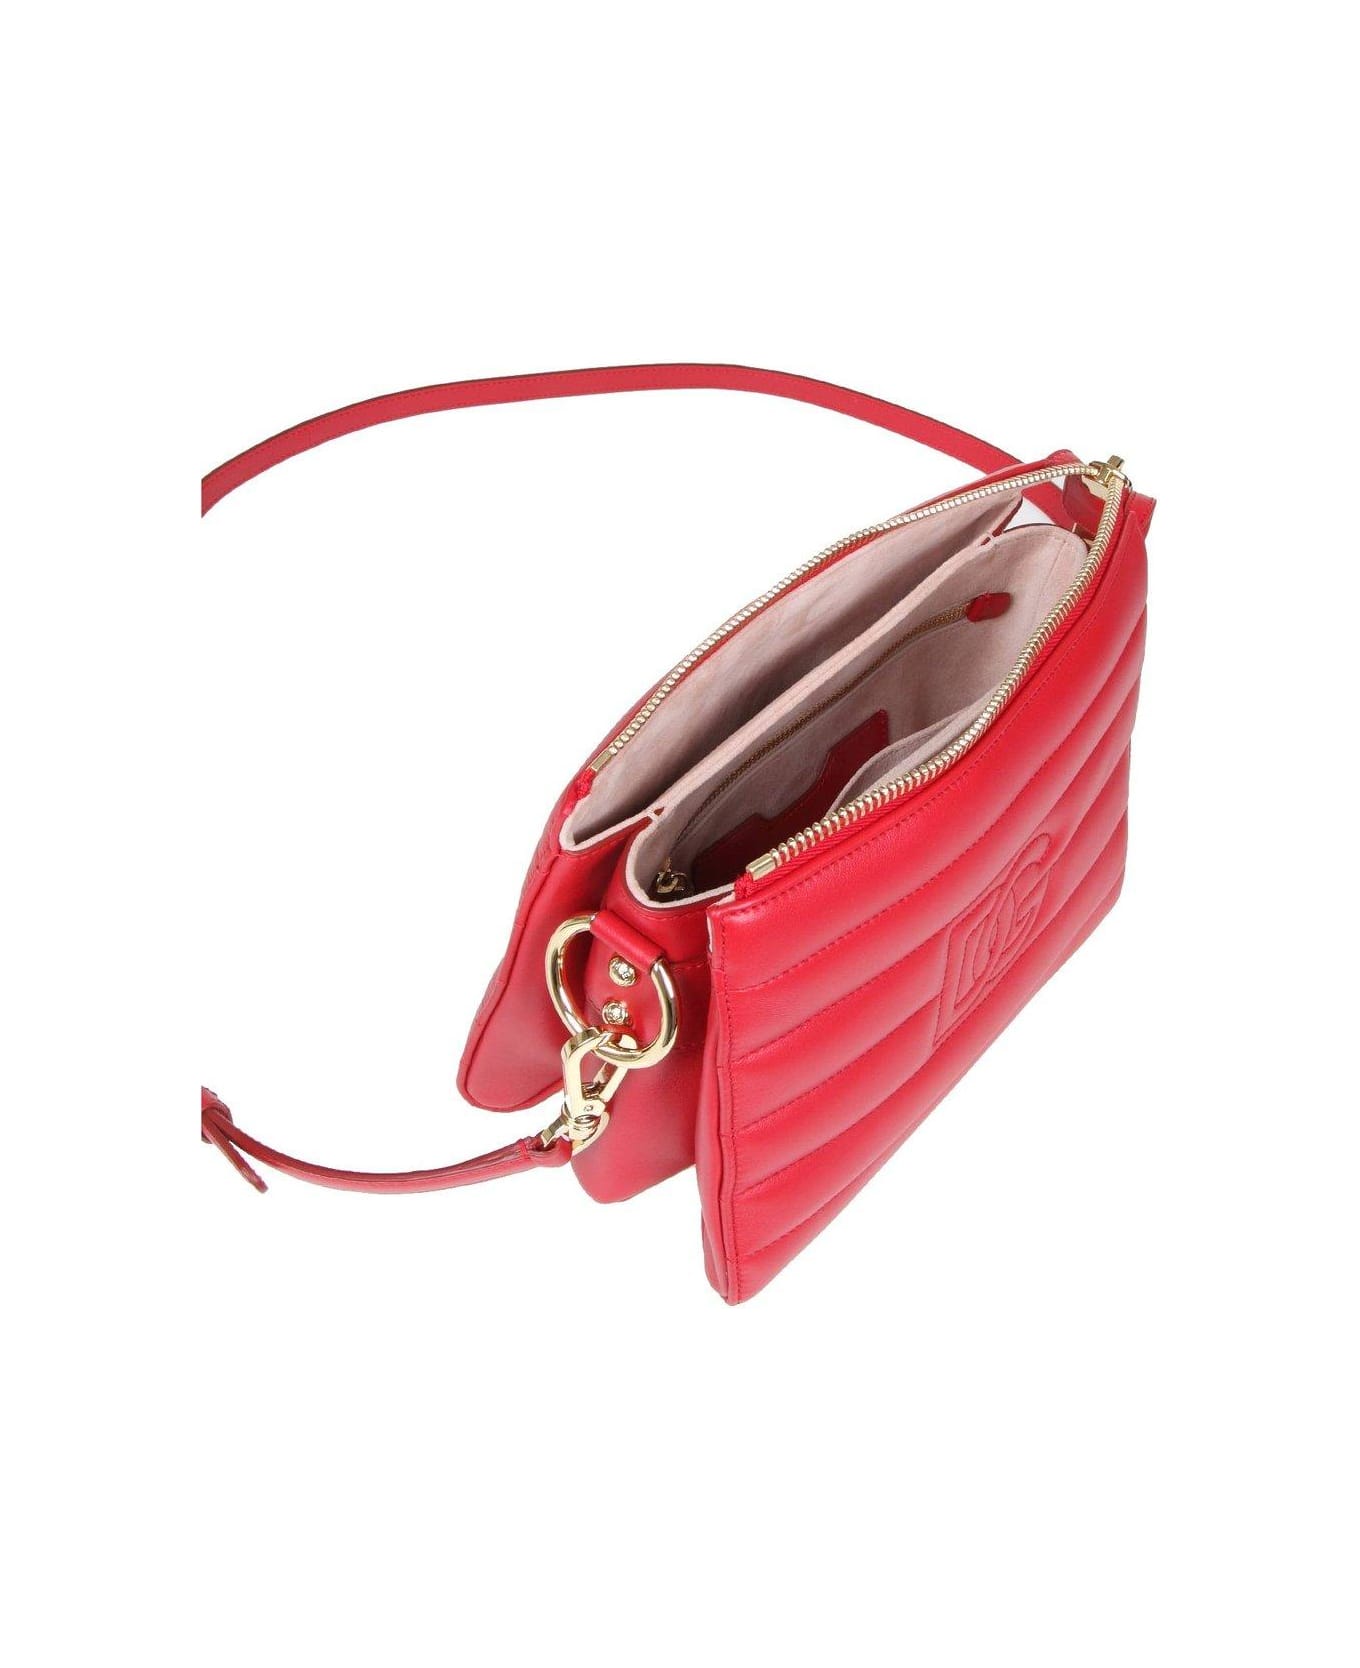 Dolce & Gabbana Dolce && Gabbana Medium Quilted Tris Bag - Red クラッチバッグ